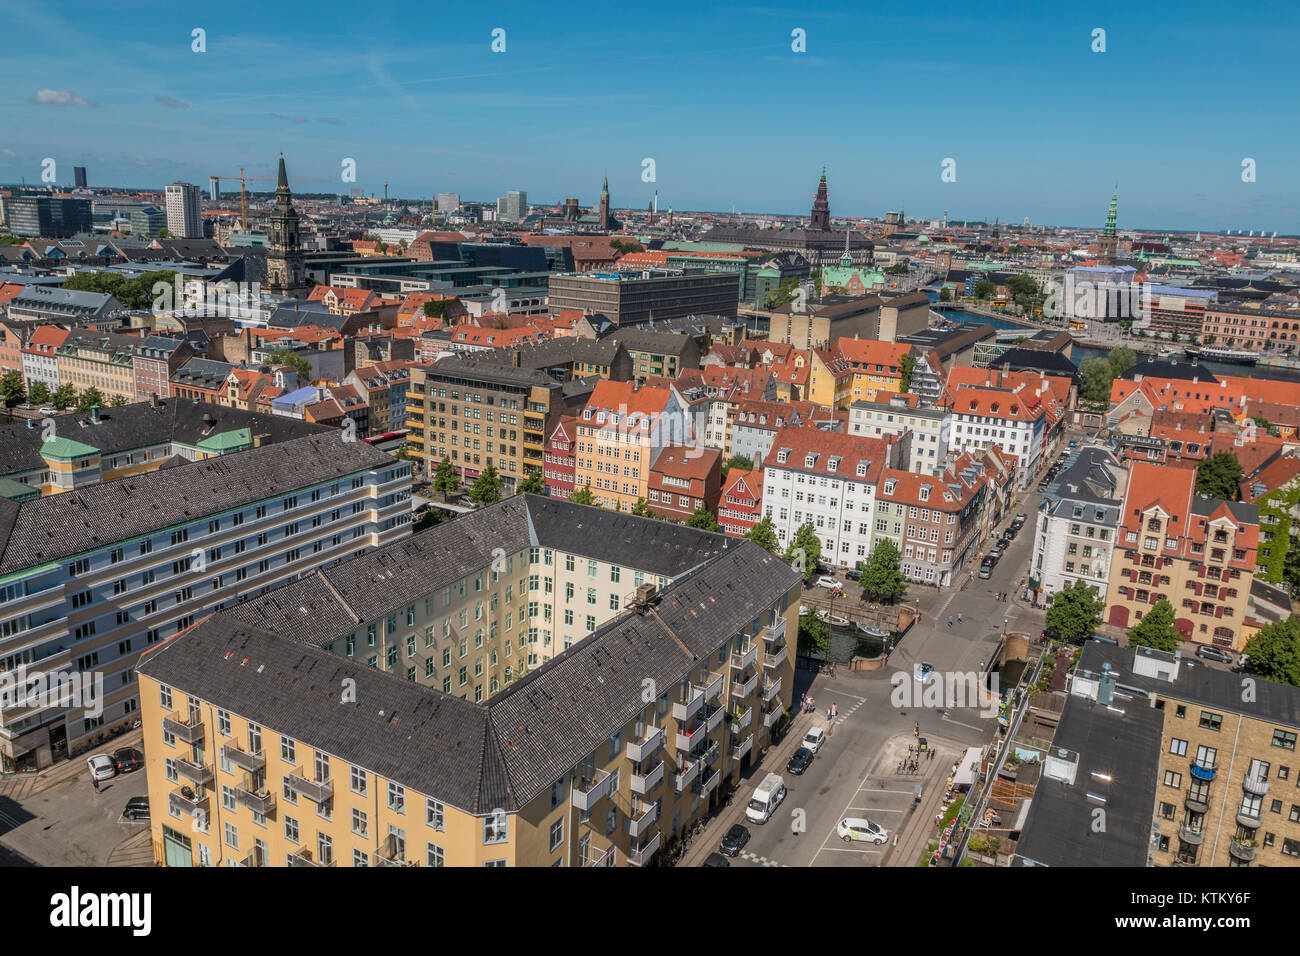 Old city of Copenhagen Denmark Stock Photo